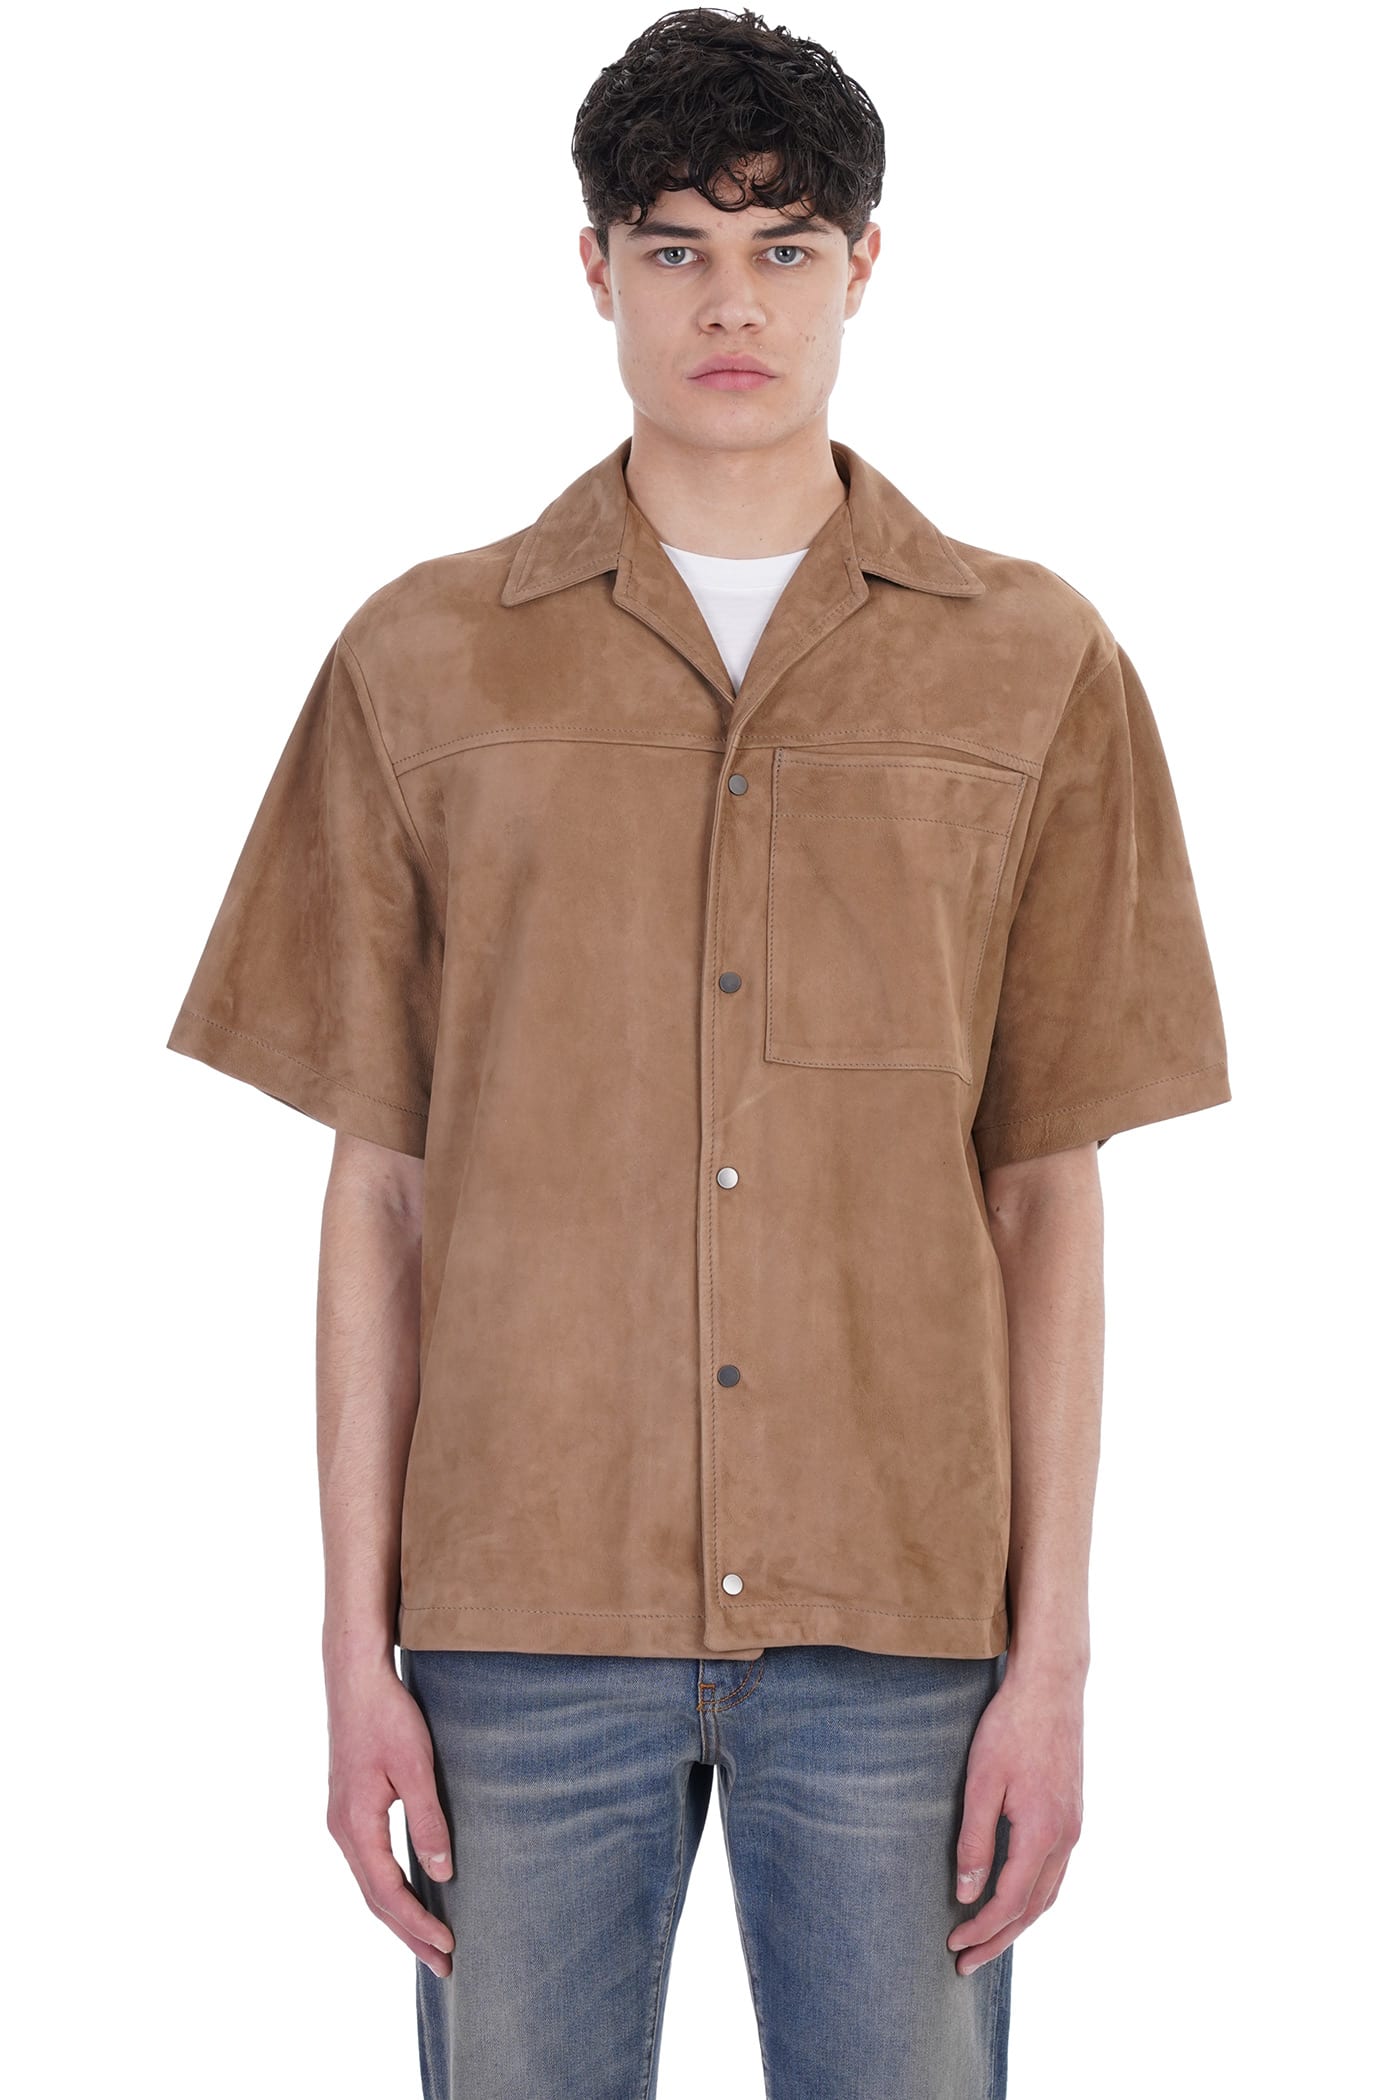 Salvatore Santoro Shirt In Beige Leather